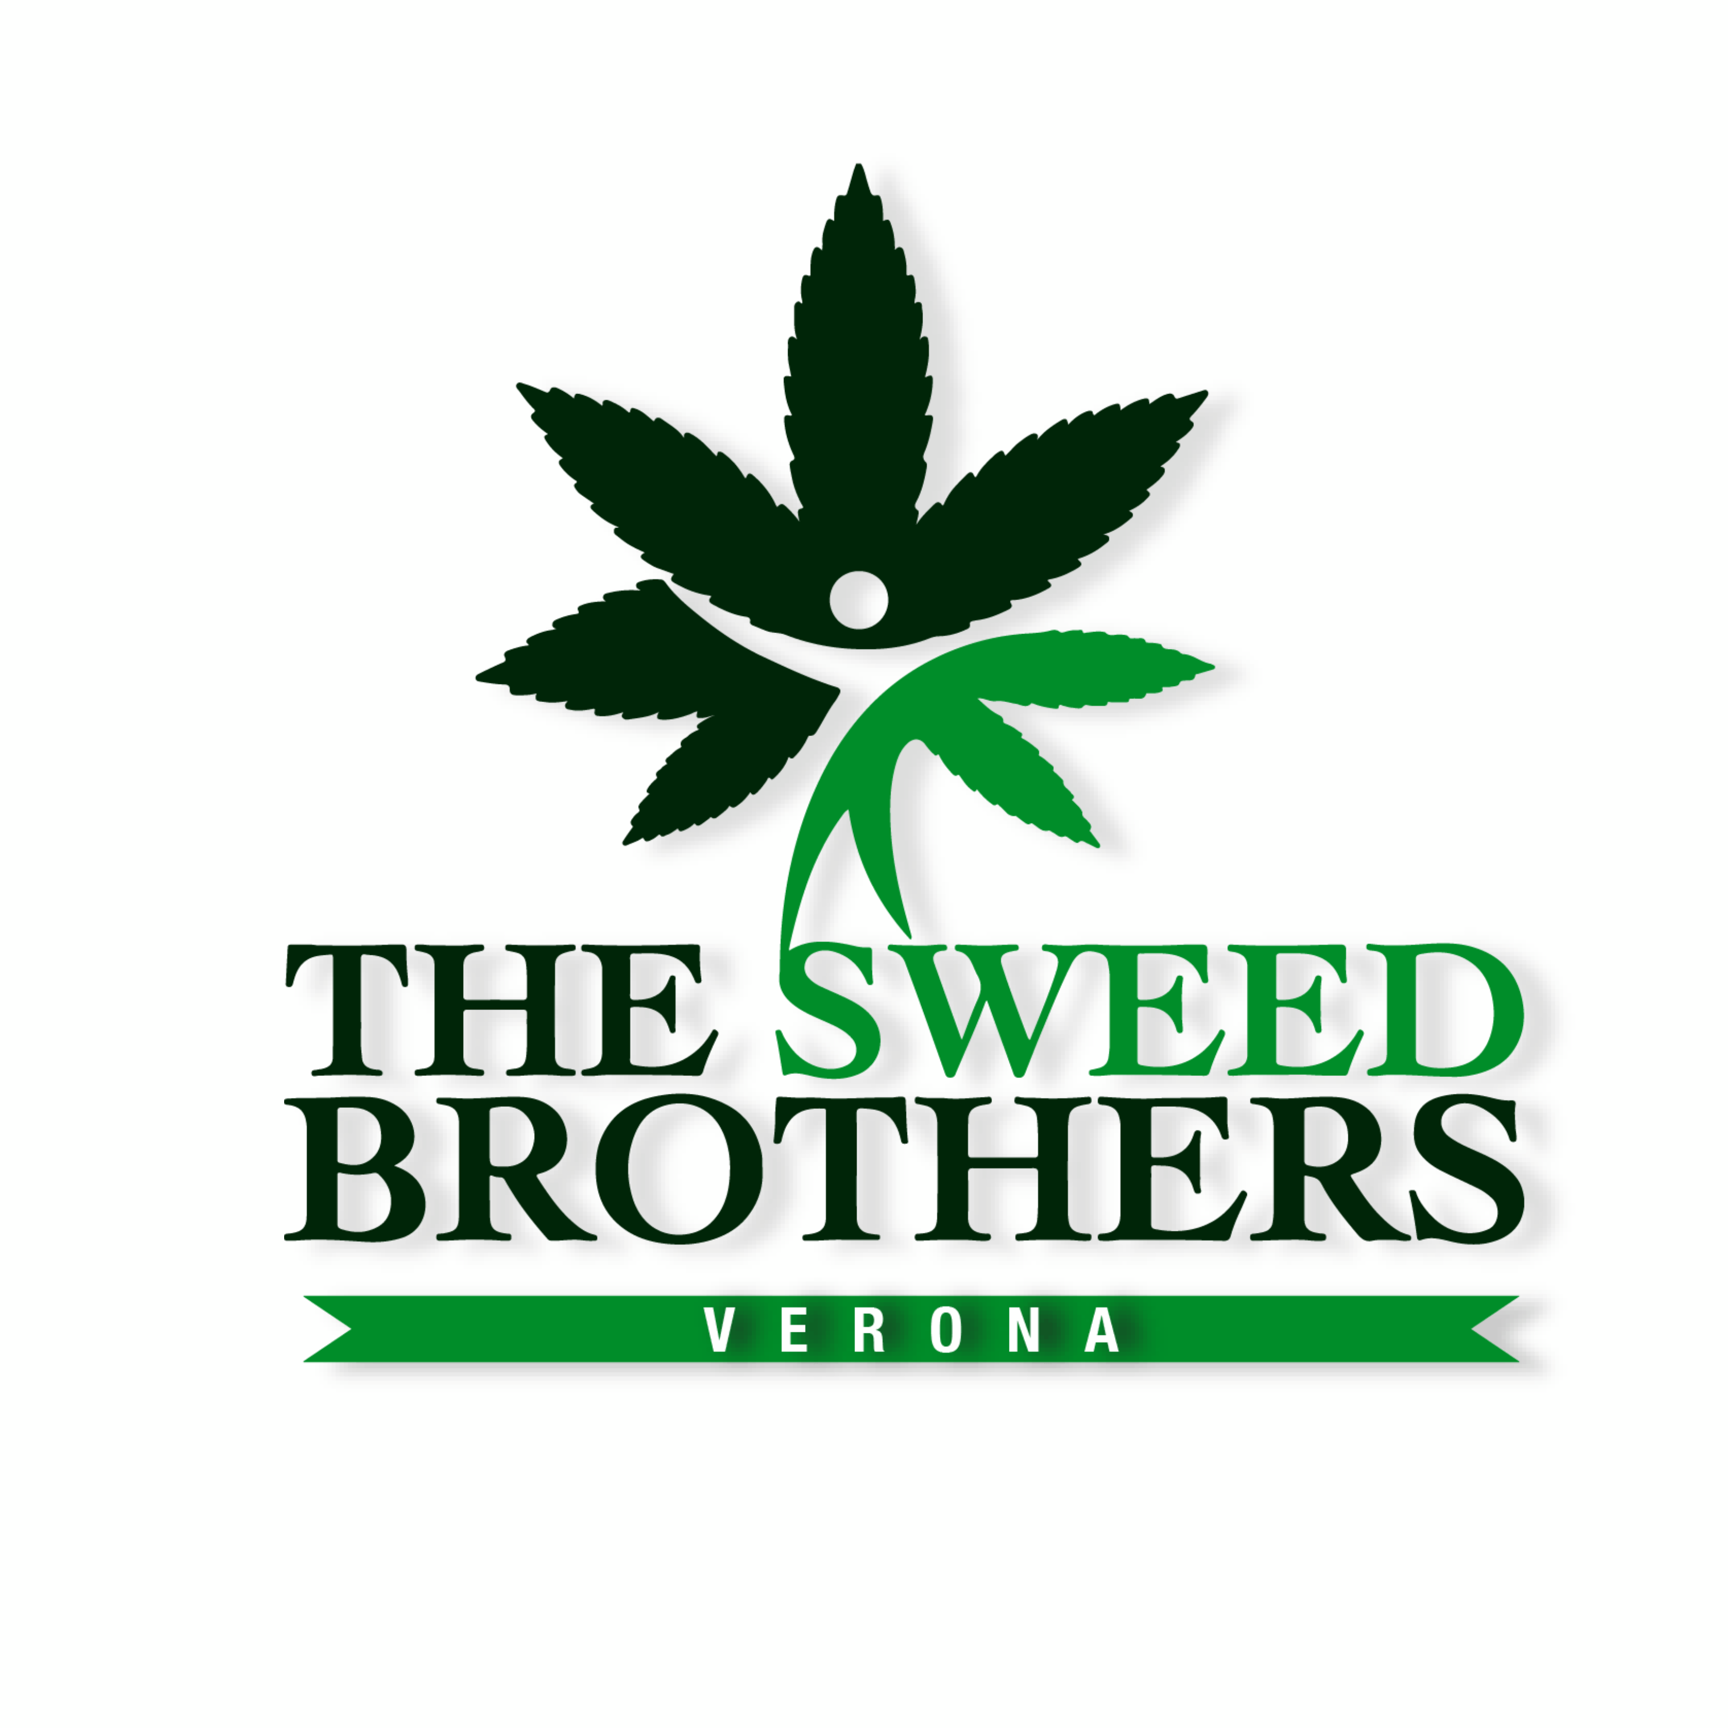 The Sweed Brothers Verona